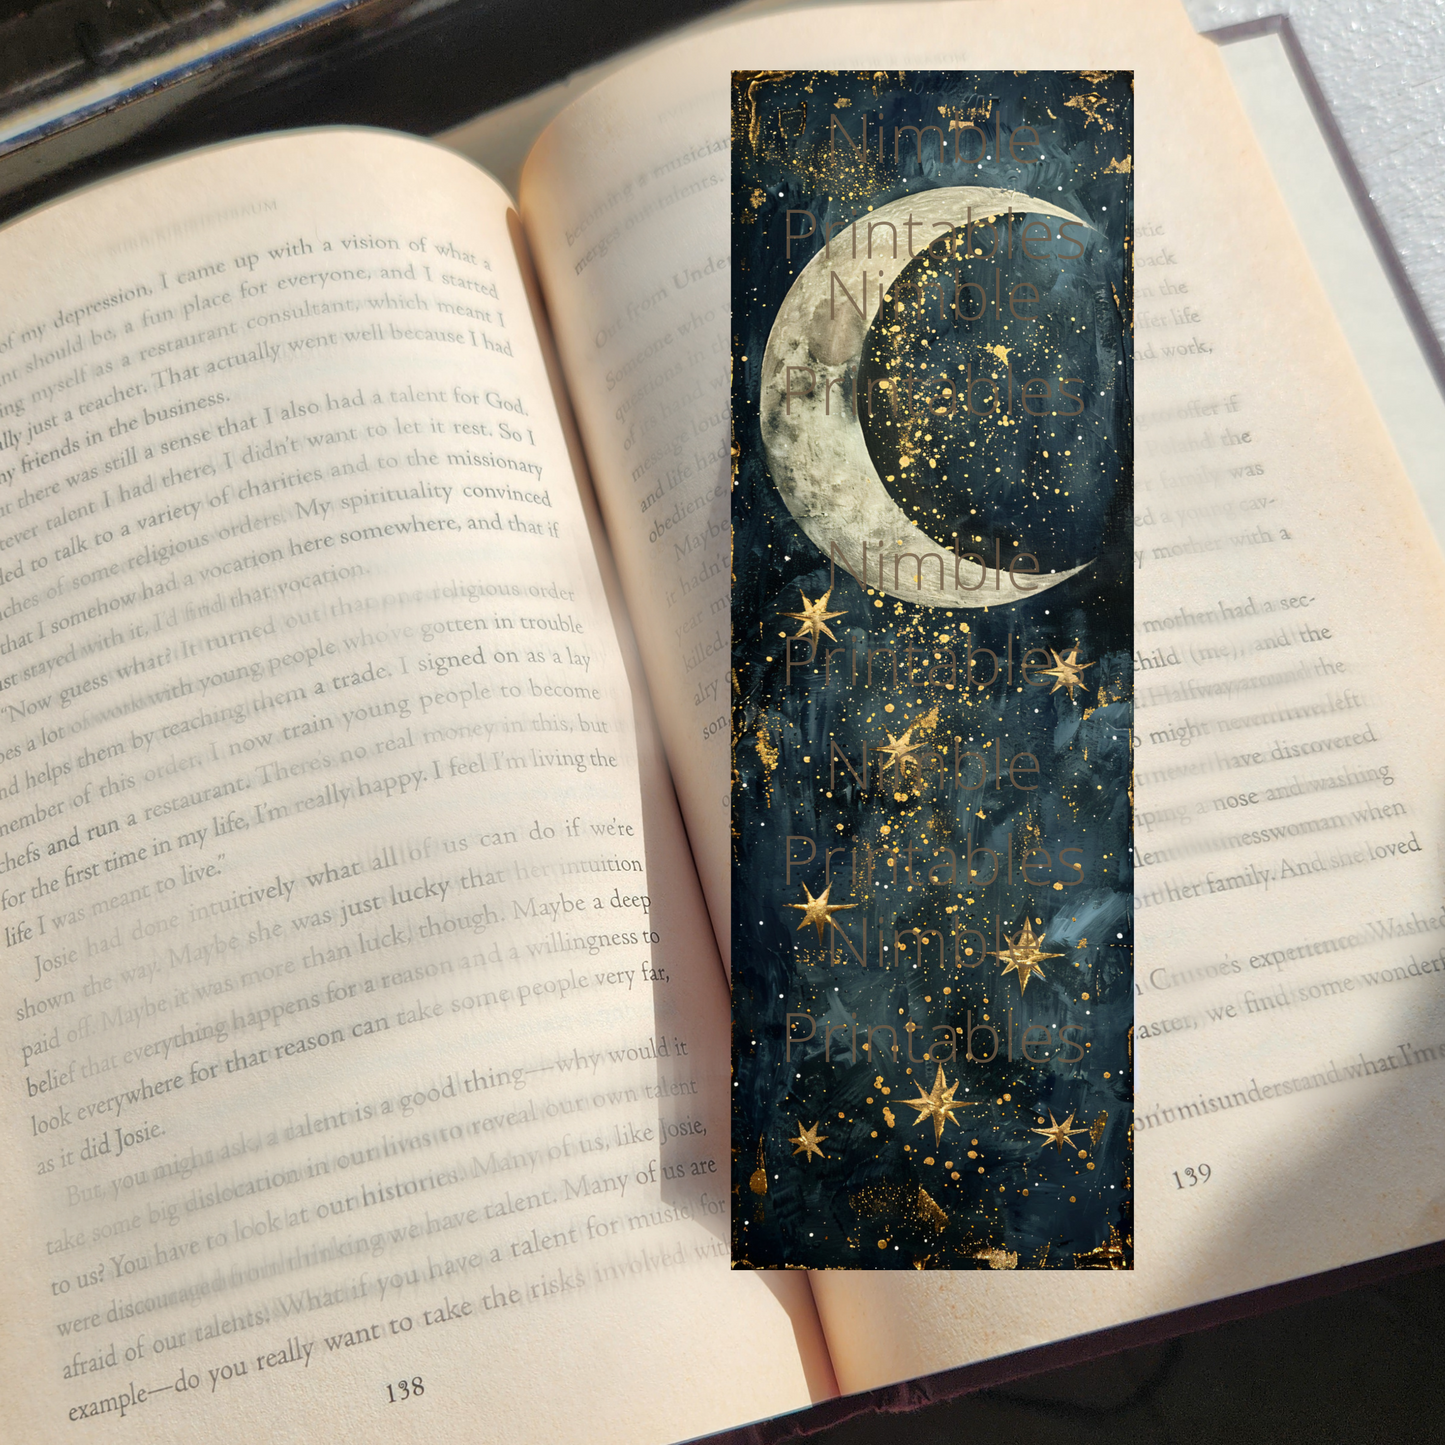 Printable Bookmarks Bundle Celestial Moon, Digital Downloads, Watercolor Bookmark, 42 PNG & 42 JPG Bookmark Sublimation, Star and Moon PNG